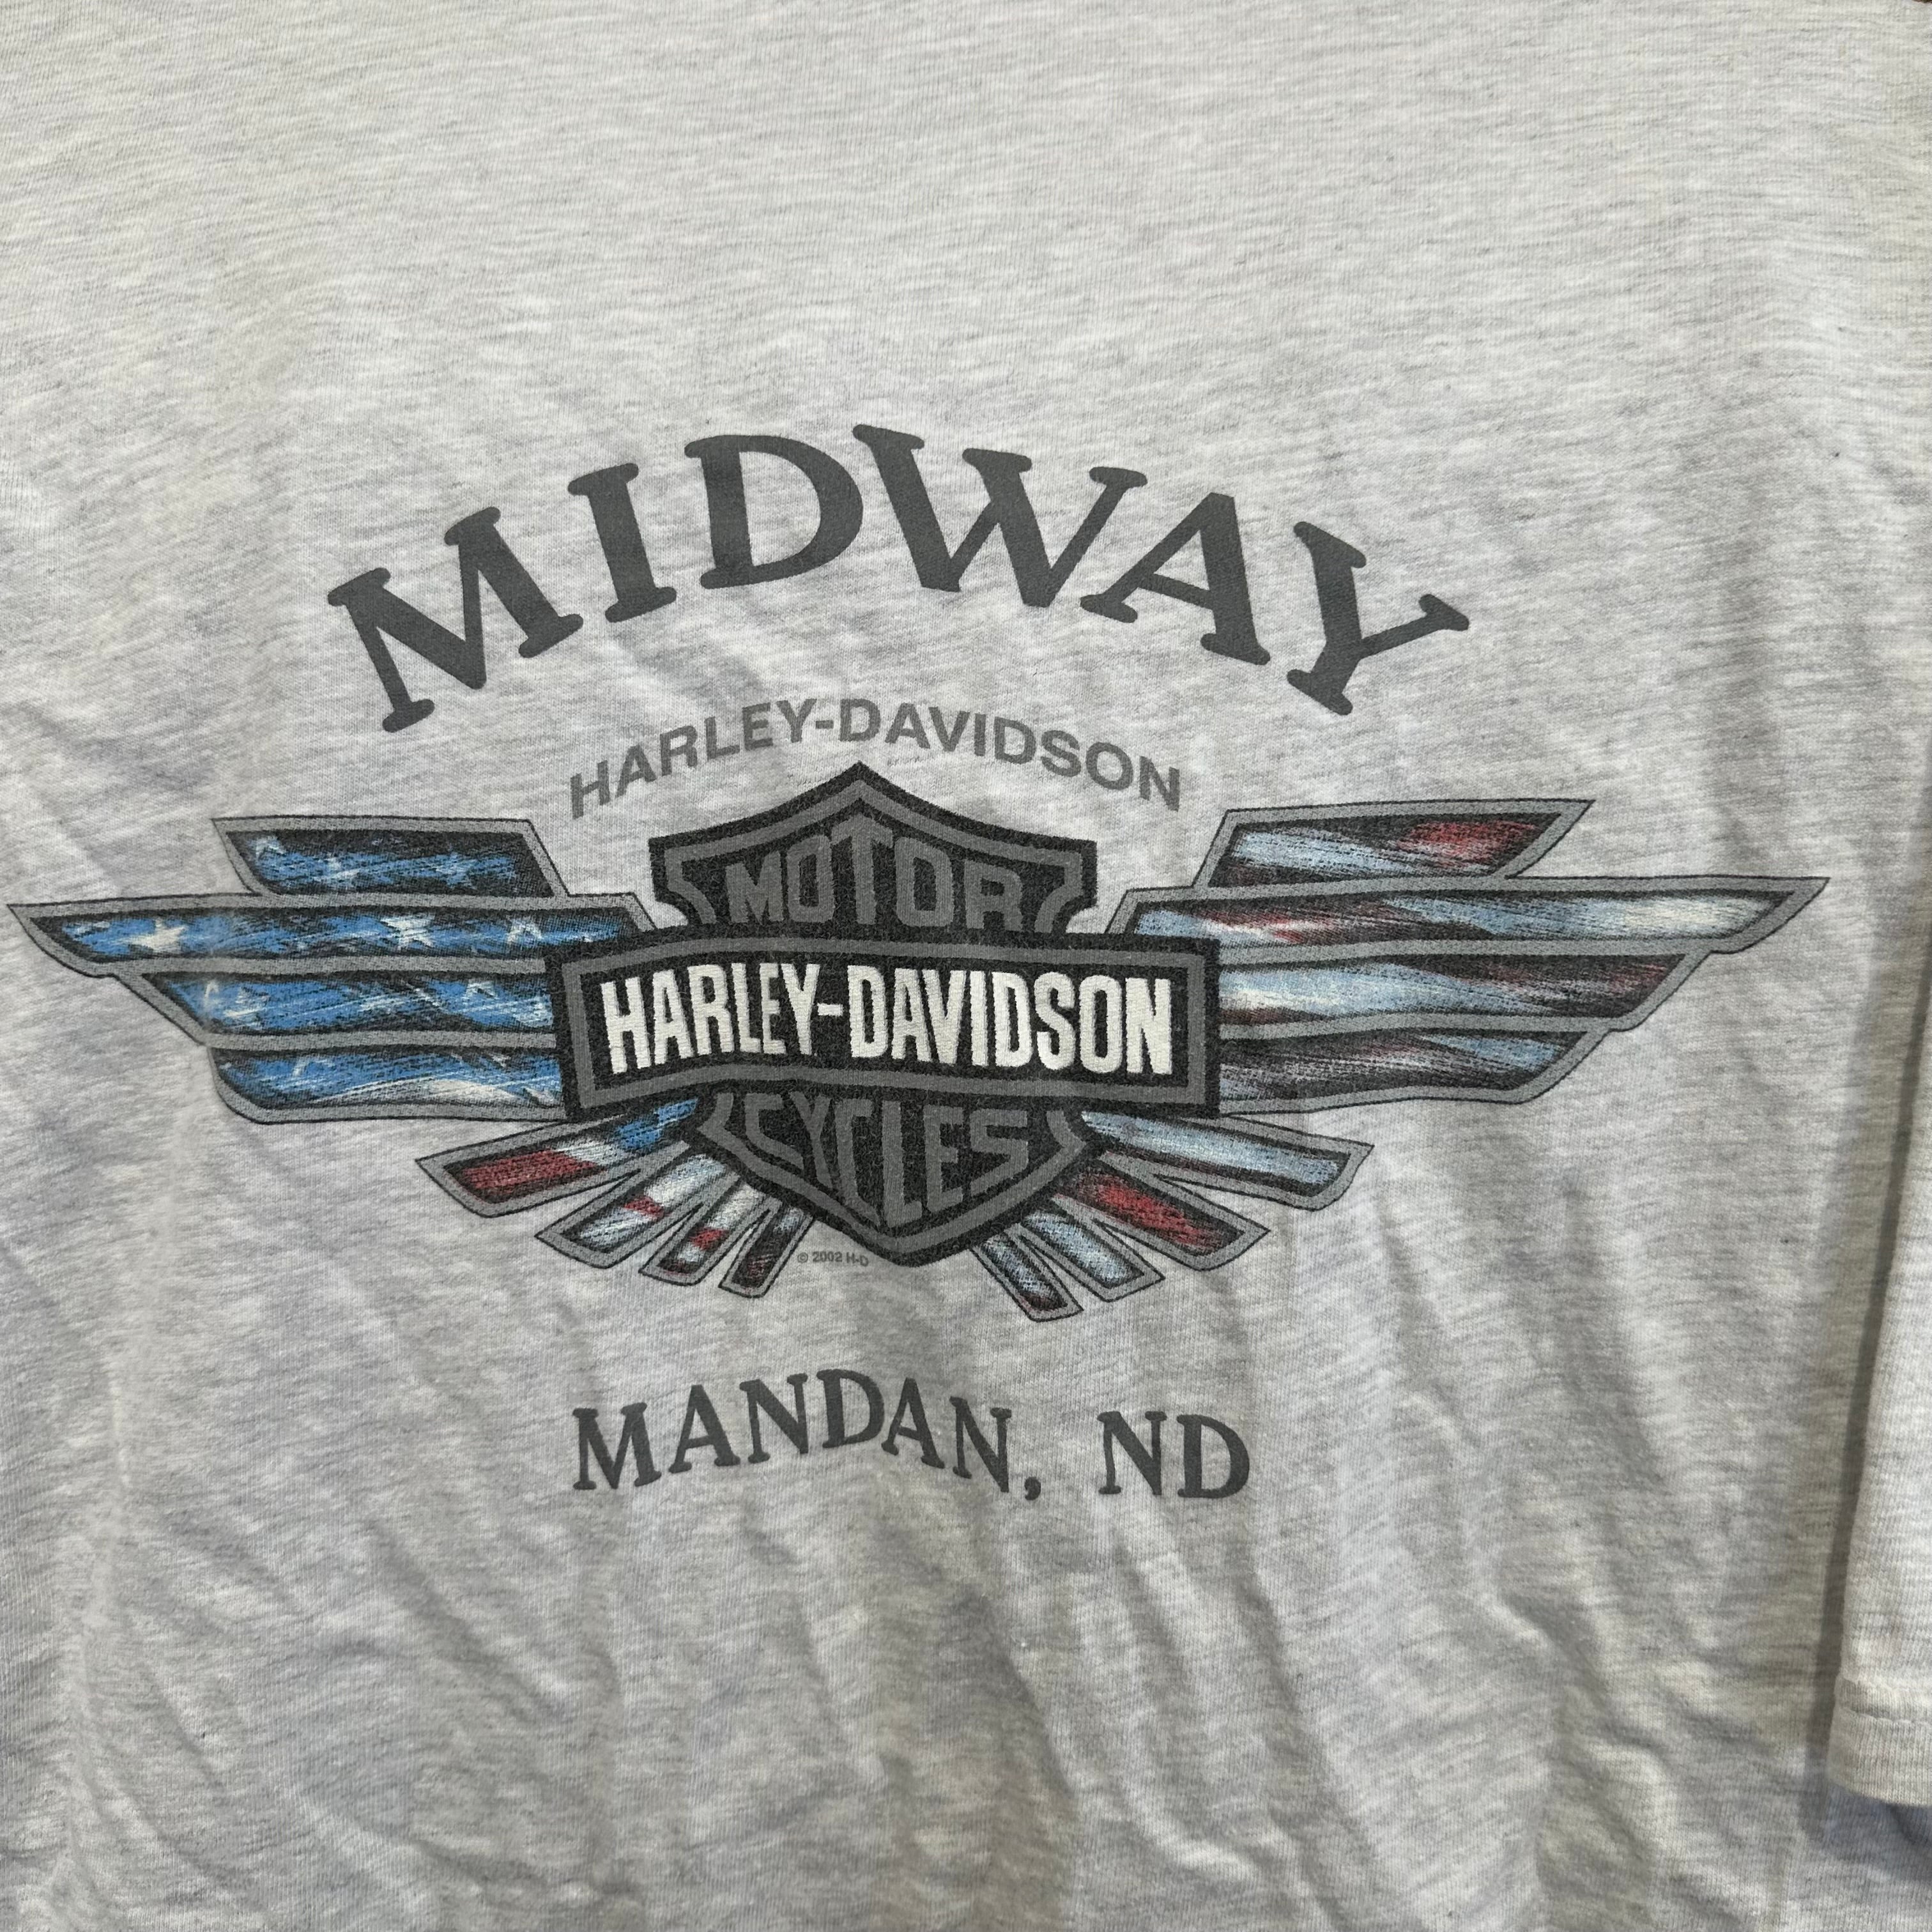 Harley Davidson Midway Parade T-Shirt